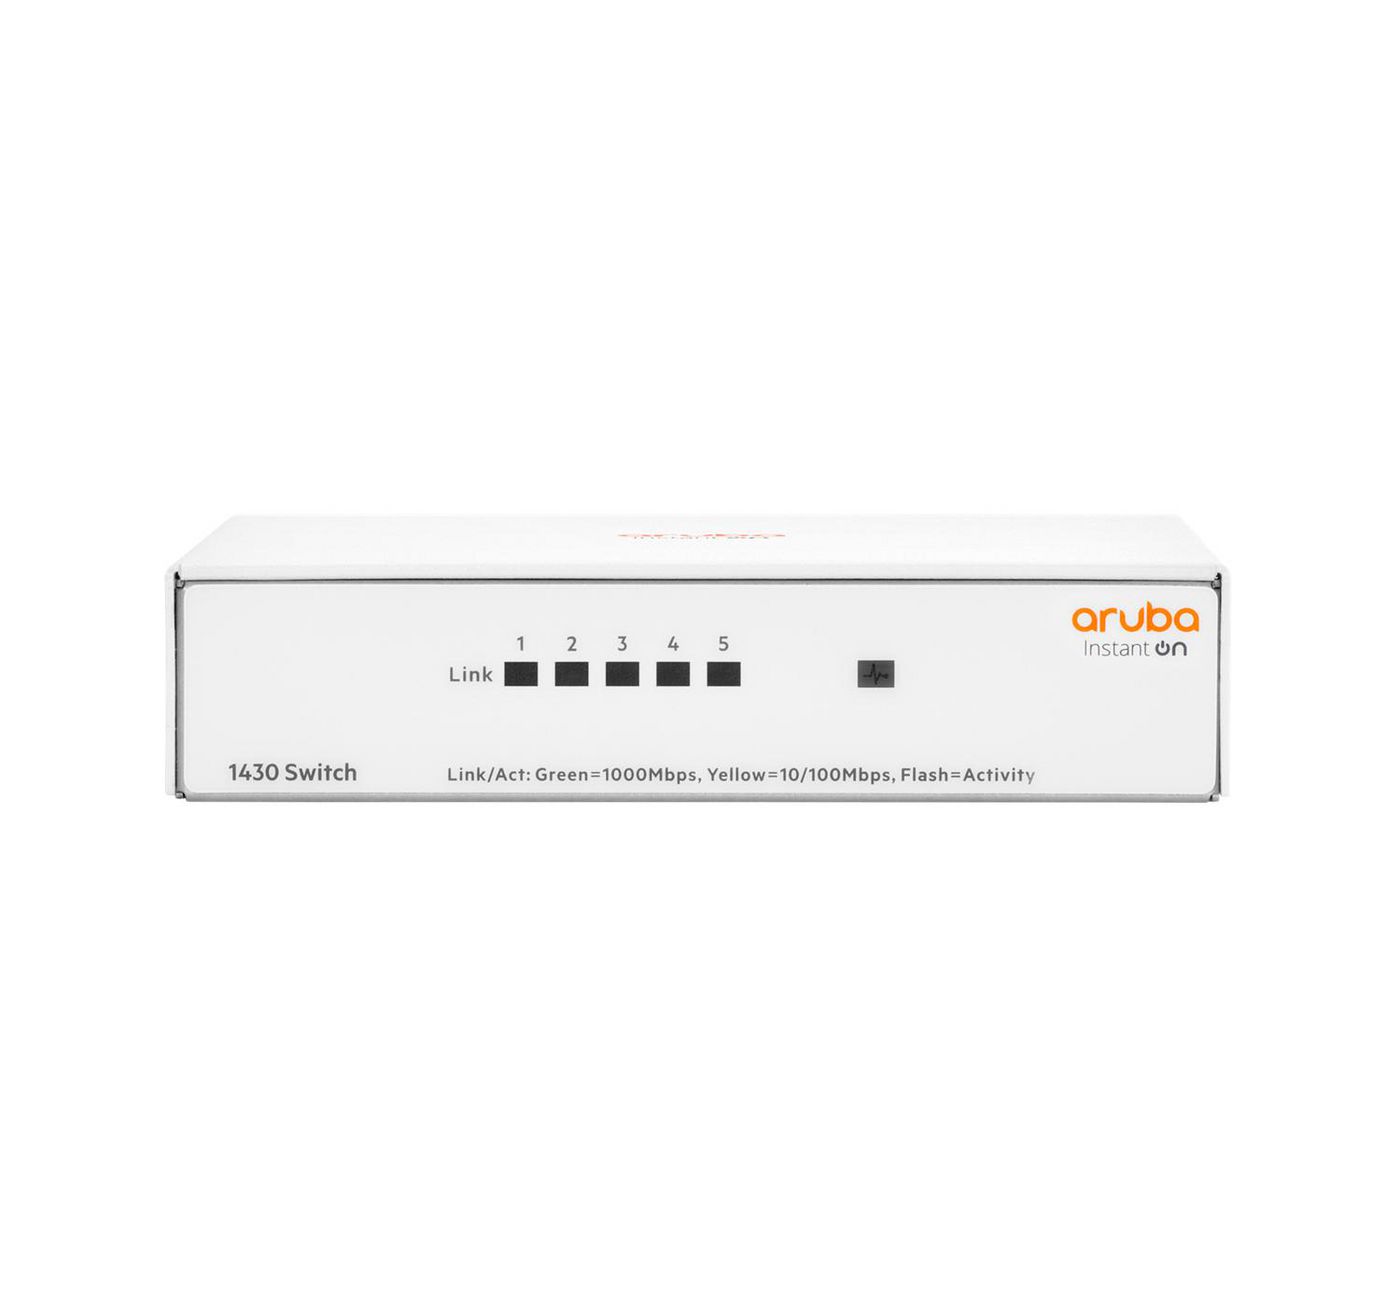 HPE ARUBA IOn 1430 5G Switch